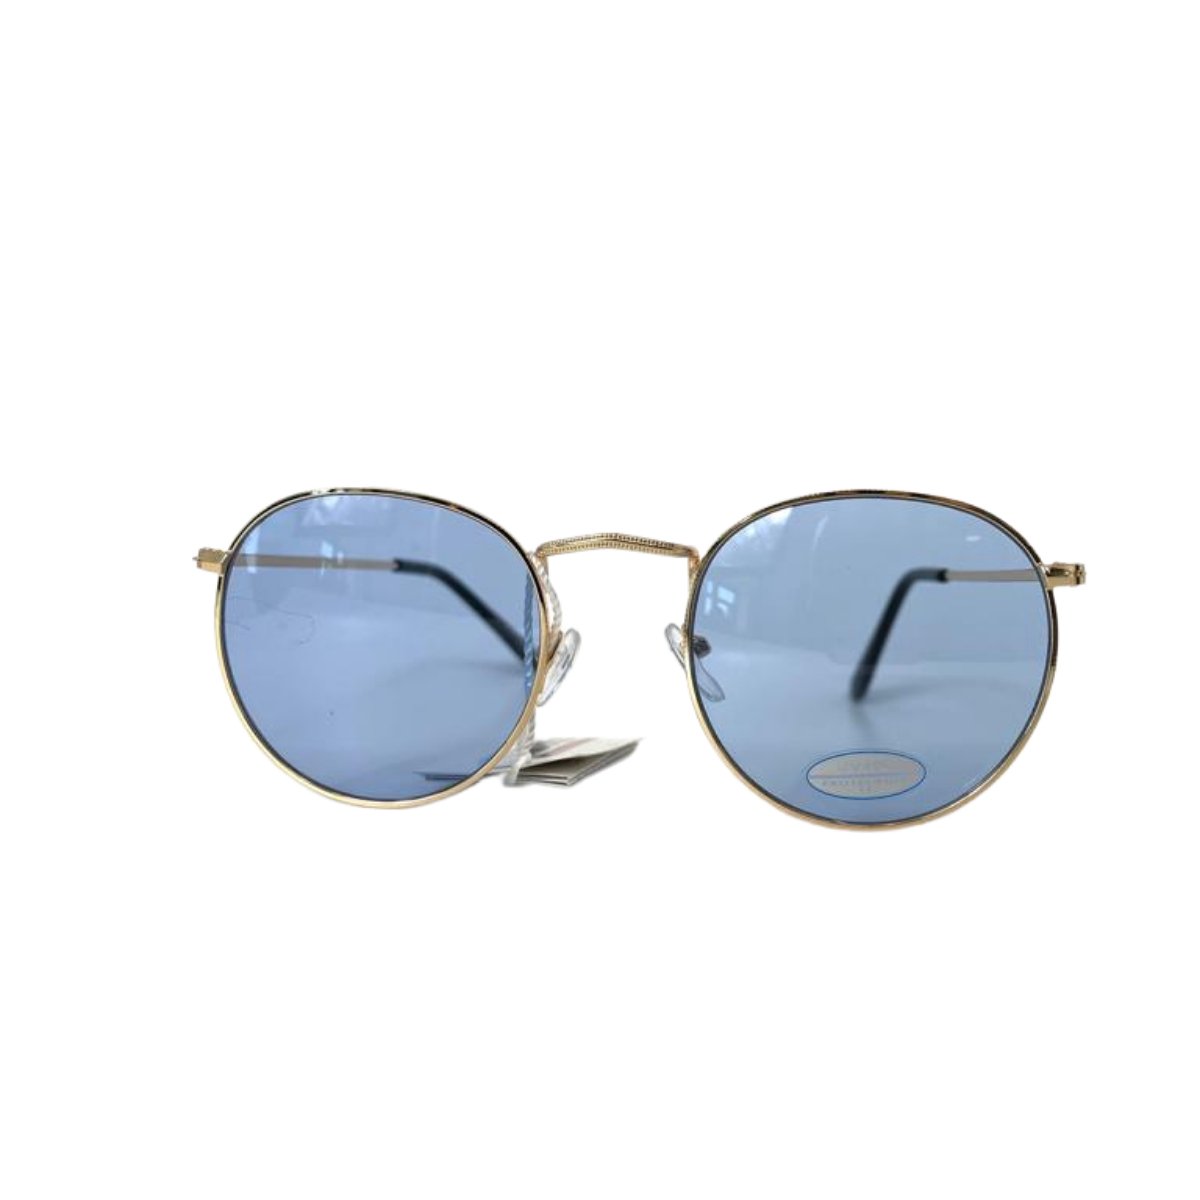 Dames Zonnebril - Zonnebrillen - Retro blauw stijl - Ronde versie - UV4000